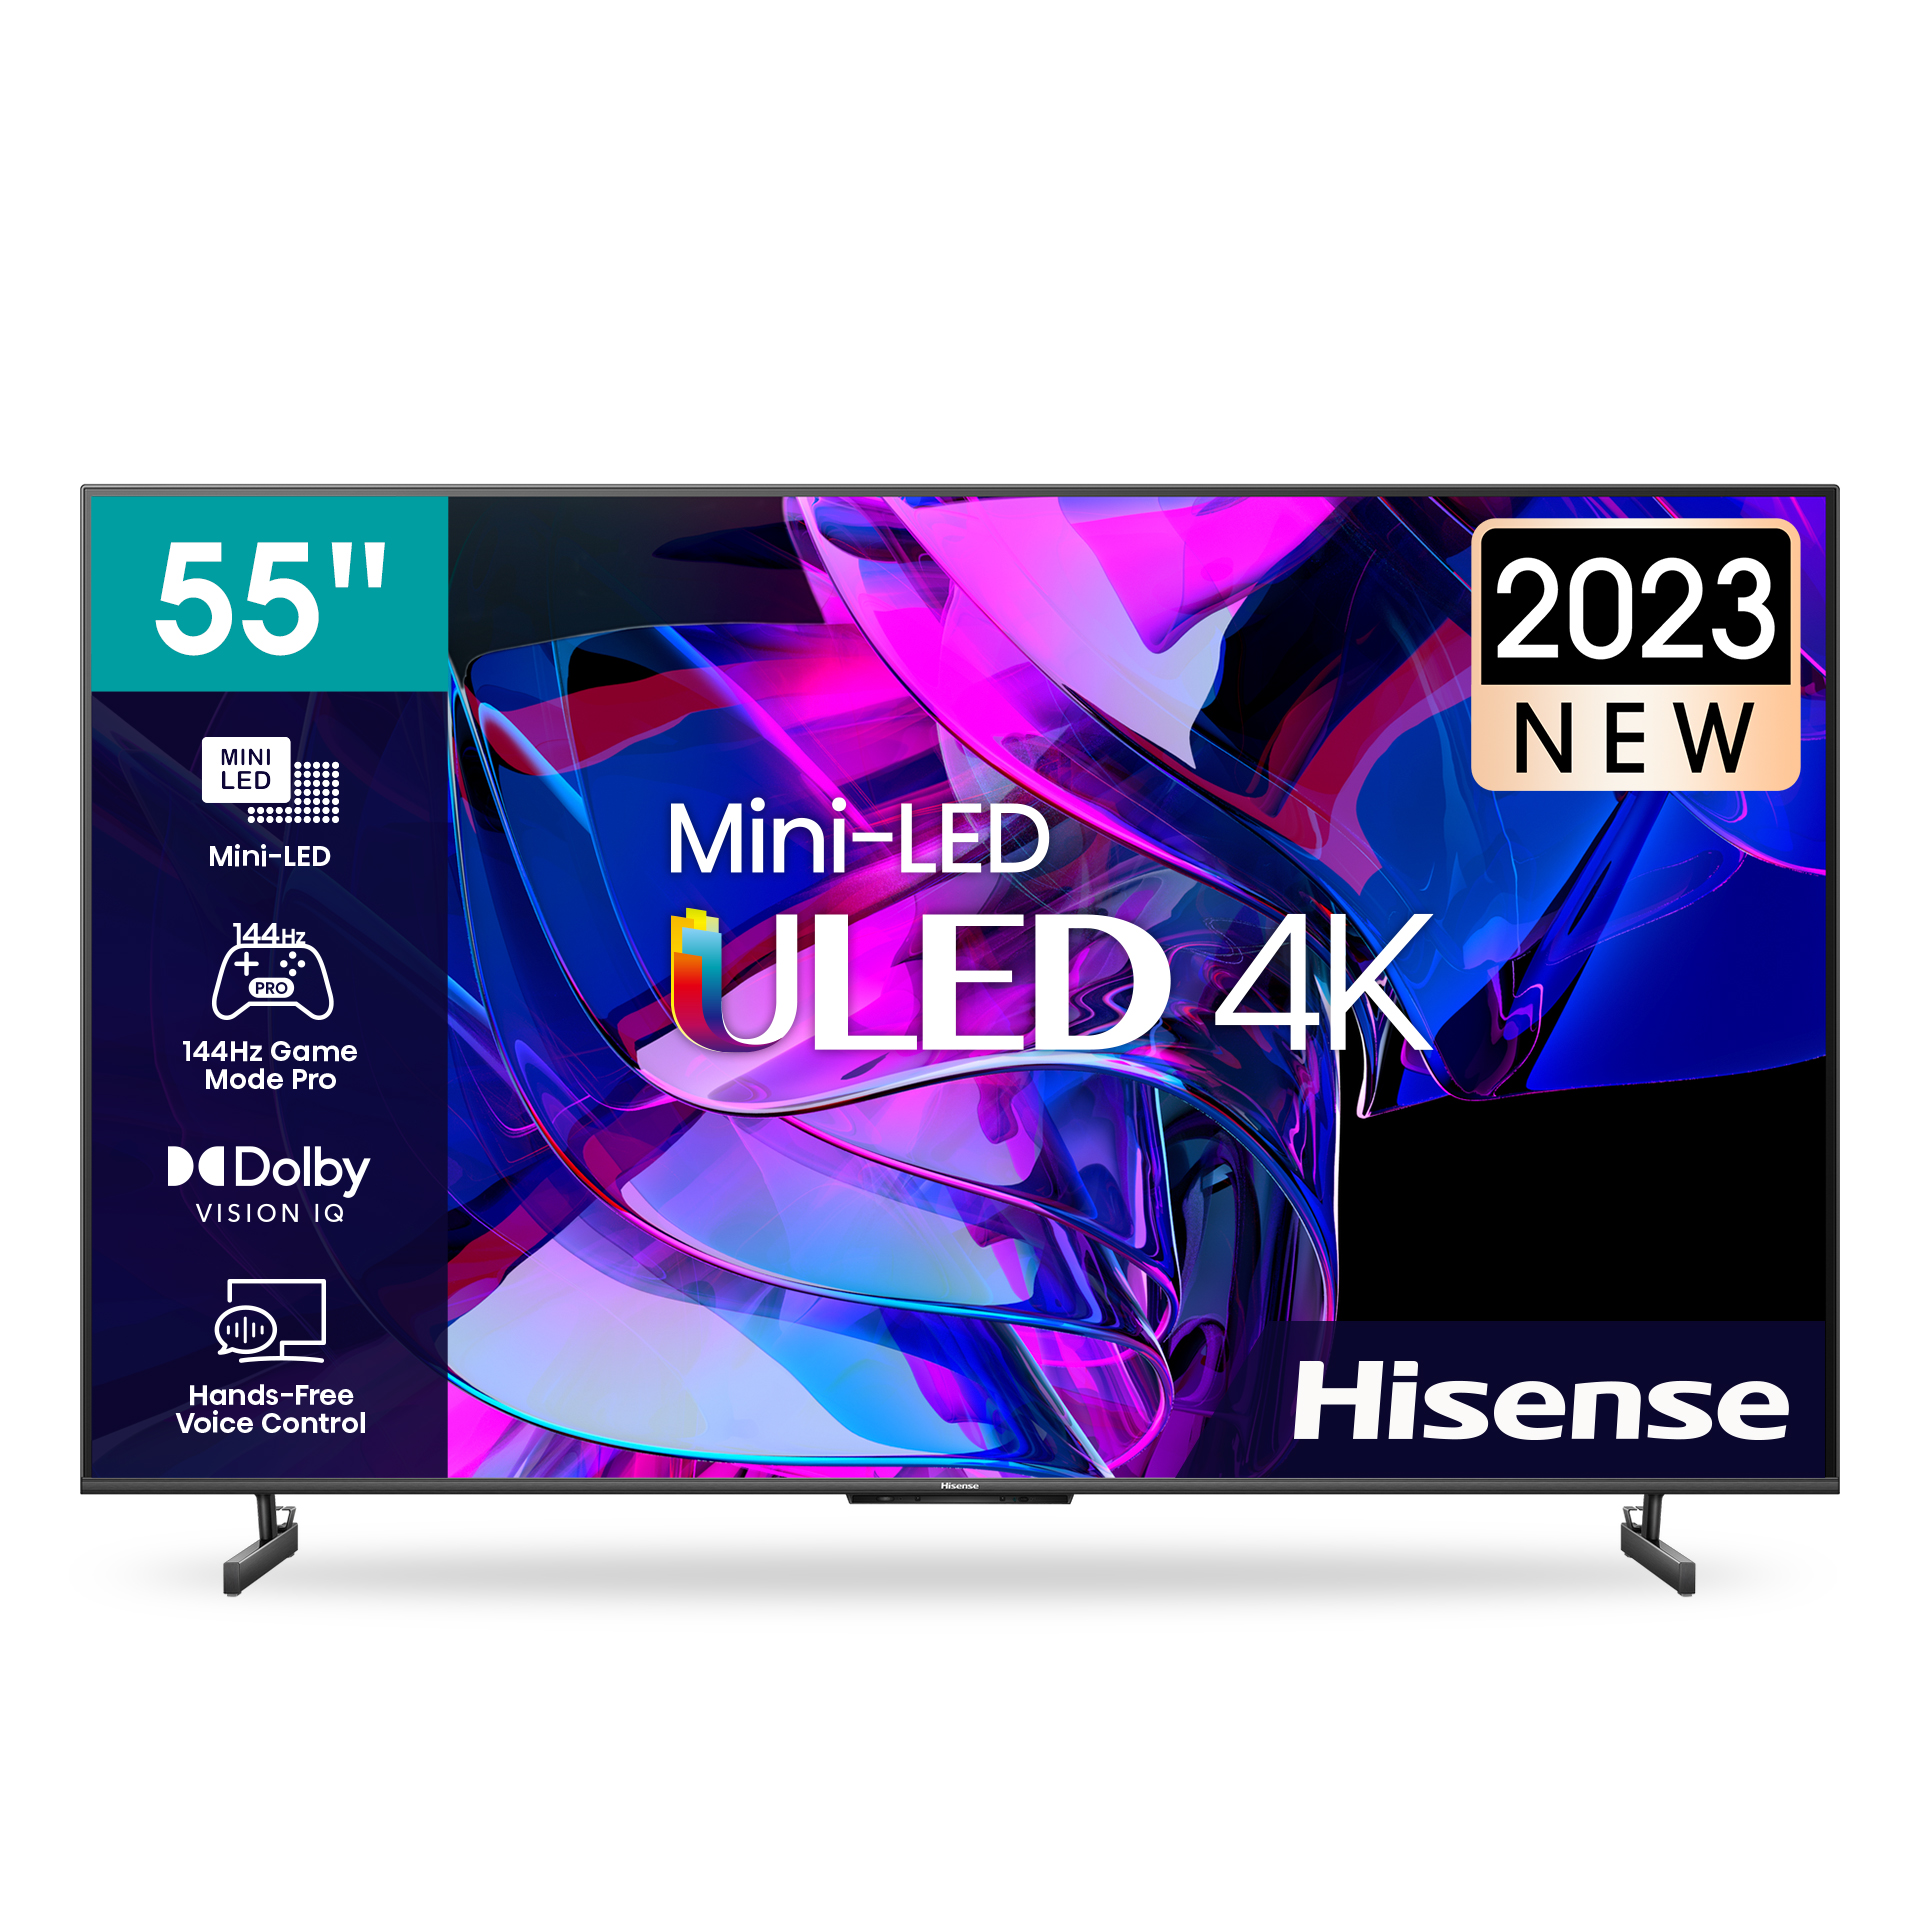 Hisense LEDN55U7K 55'' Mini-Led ULED 4K; 144Hz Game Mode Pro; Quantum Dot Colour; Dolby Vision IQ; Multi-Channel Surround 2.1